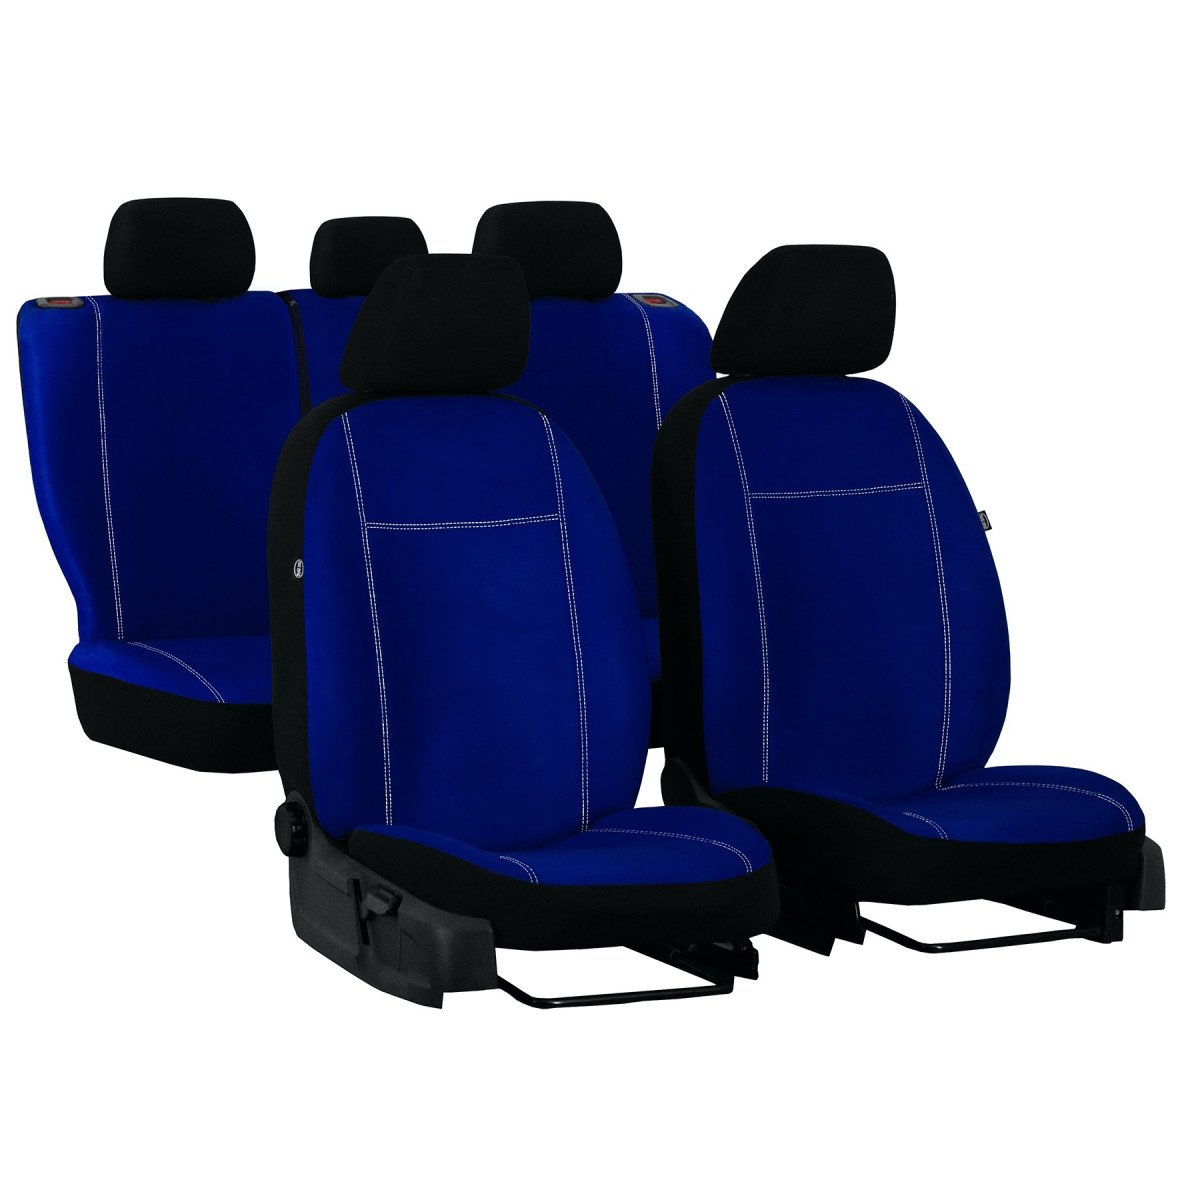 Cungko Sitzbezüge Auto Set Zubehör für VW-Golf v/VW-touran/Vw-Golf